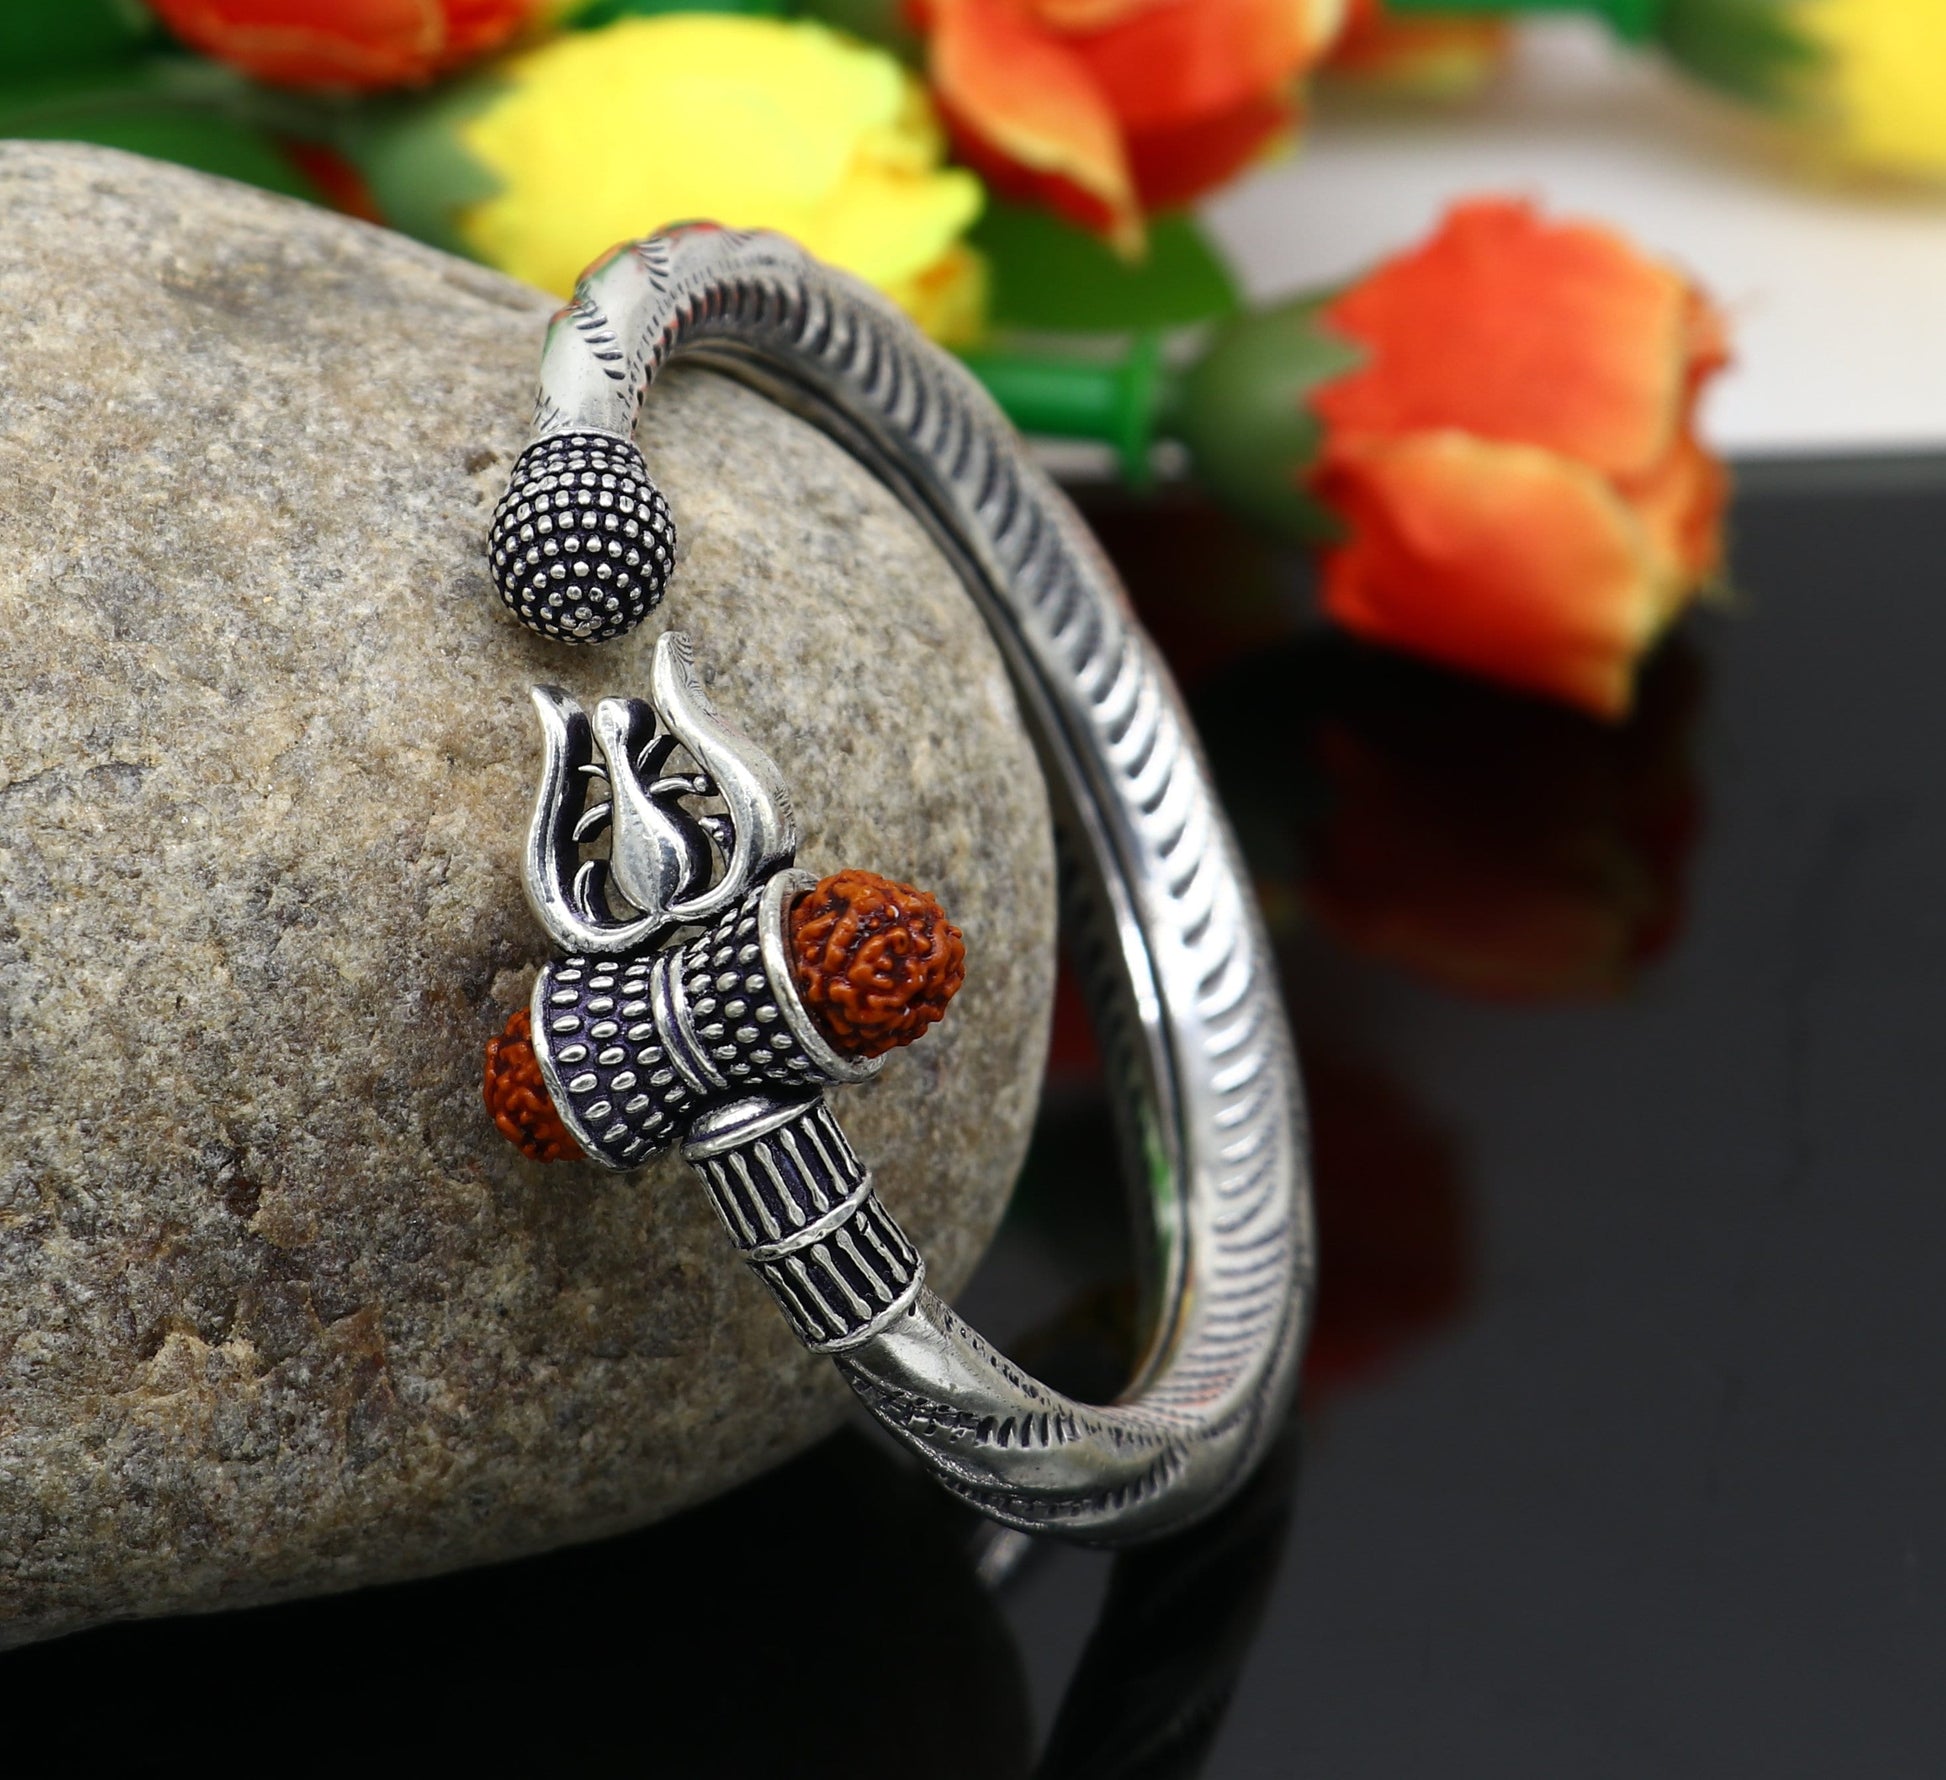 Divine 925 Sterling silver handmade chitai work Lord Shiva trident trishul bangle bracelet natural Rudraksha beads customized kada nsk442 - TRIBAL ORNAMENTS